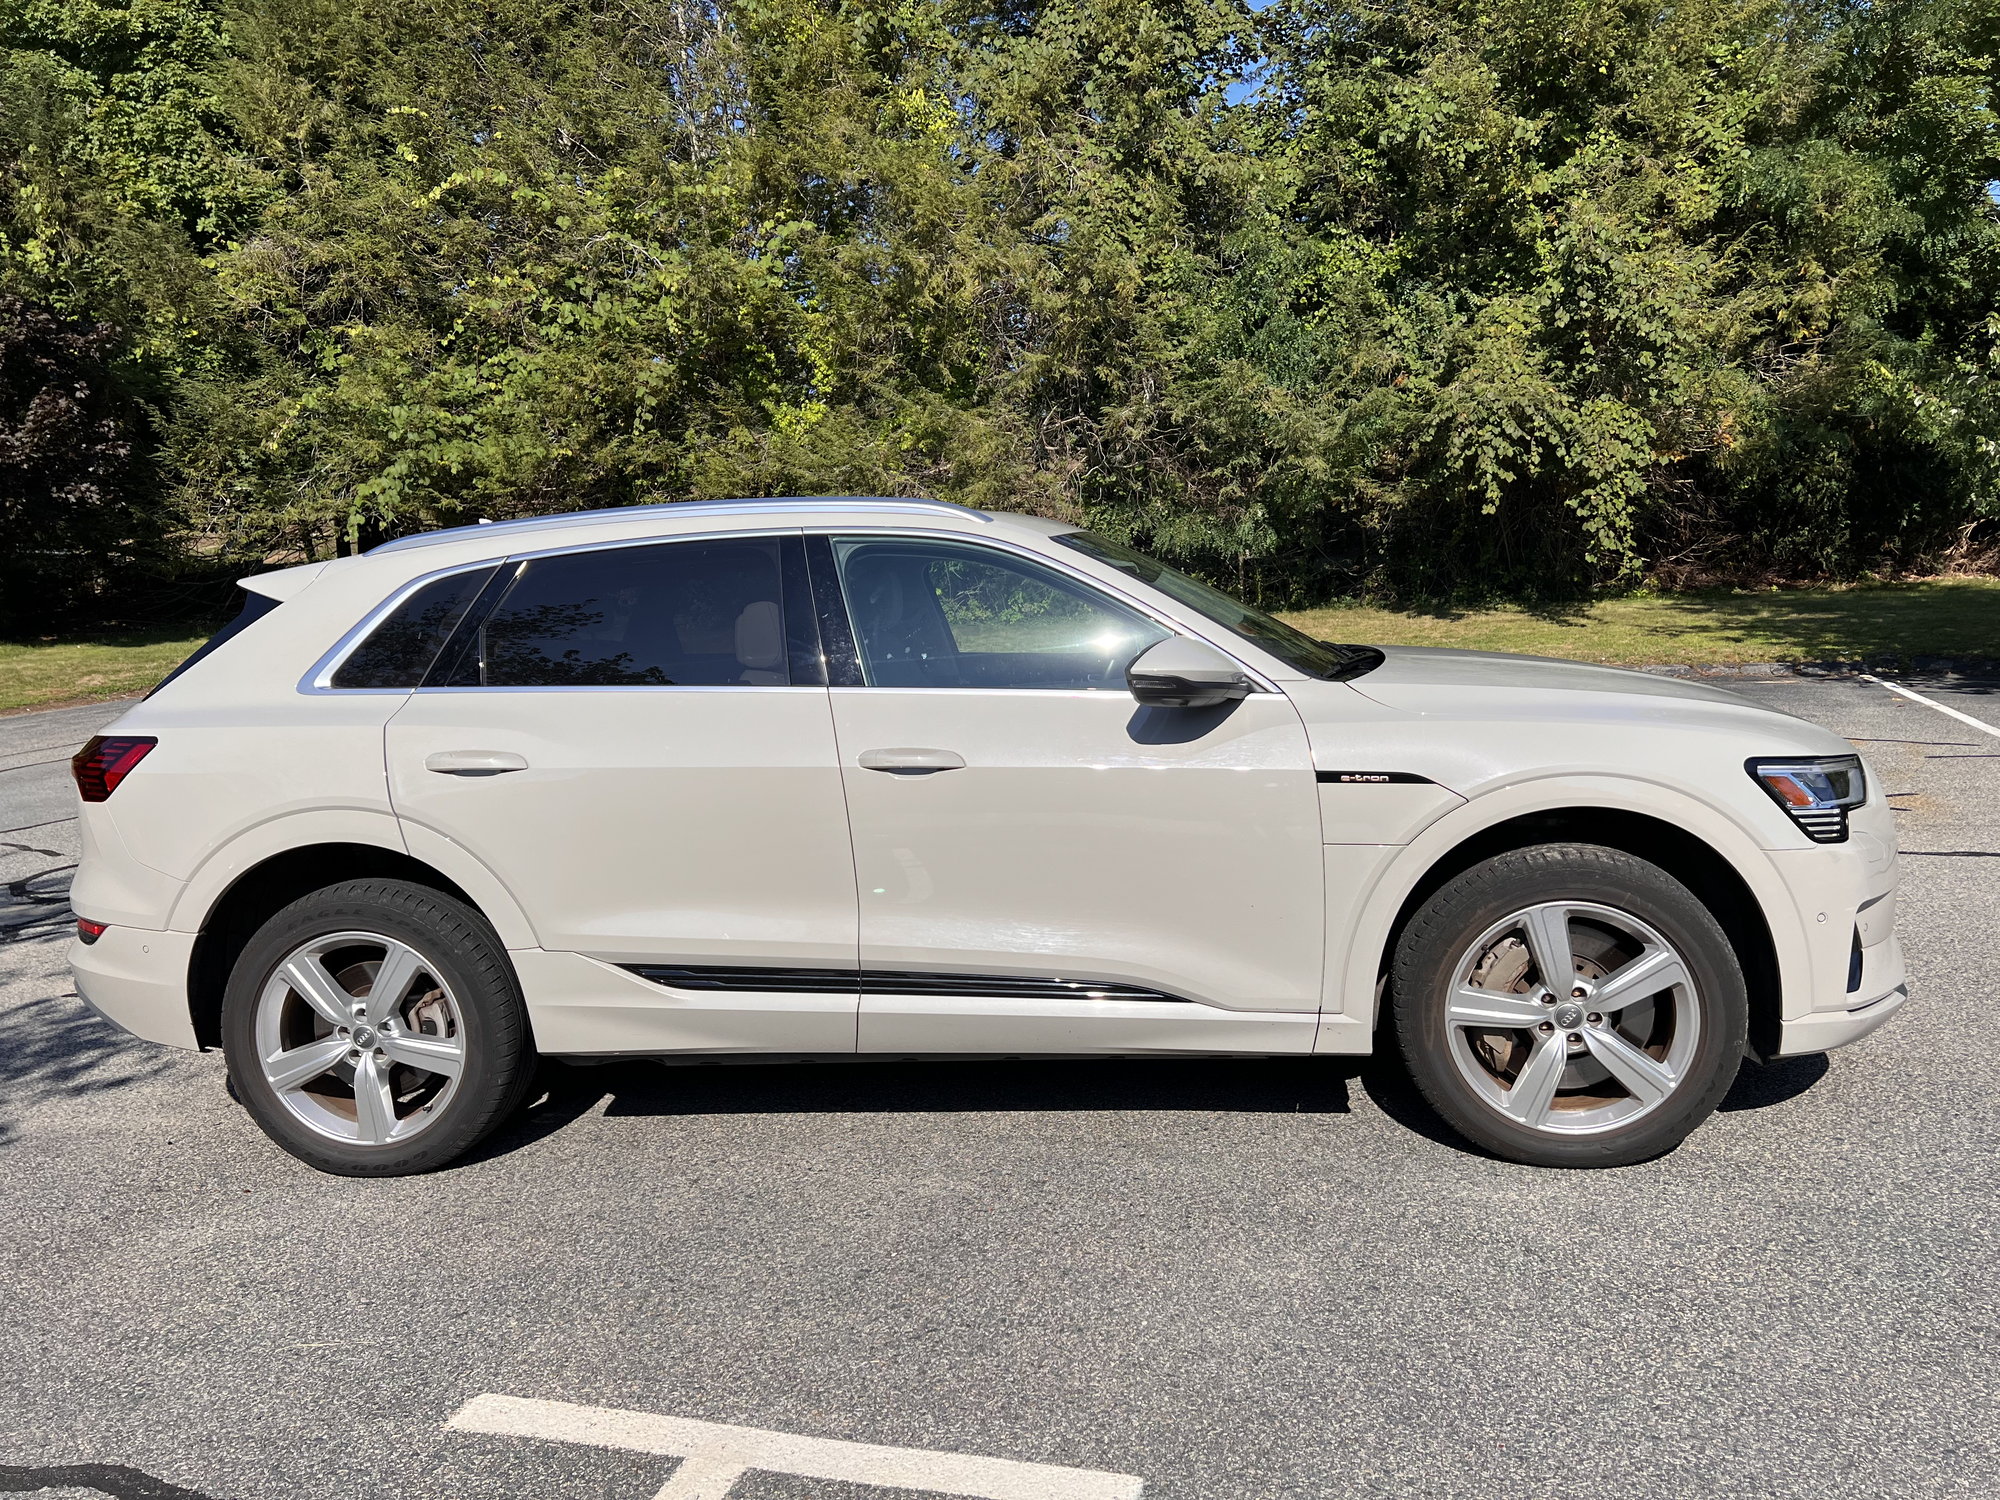 2019 Audi e-tron Quattro - e-tron:  Prestige, Siam Beige exterior and, Pearl Beige interior, excellent condition - Used - VIN wa1vaage0kb015822 - 25,100 Miles - Other - AWD - SUV - Beige - Norwell, MA 02061, United States